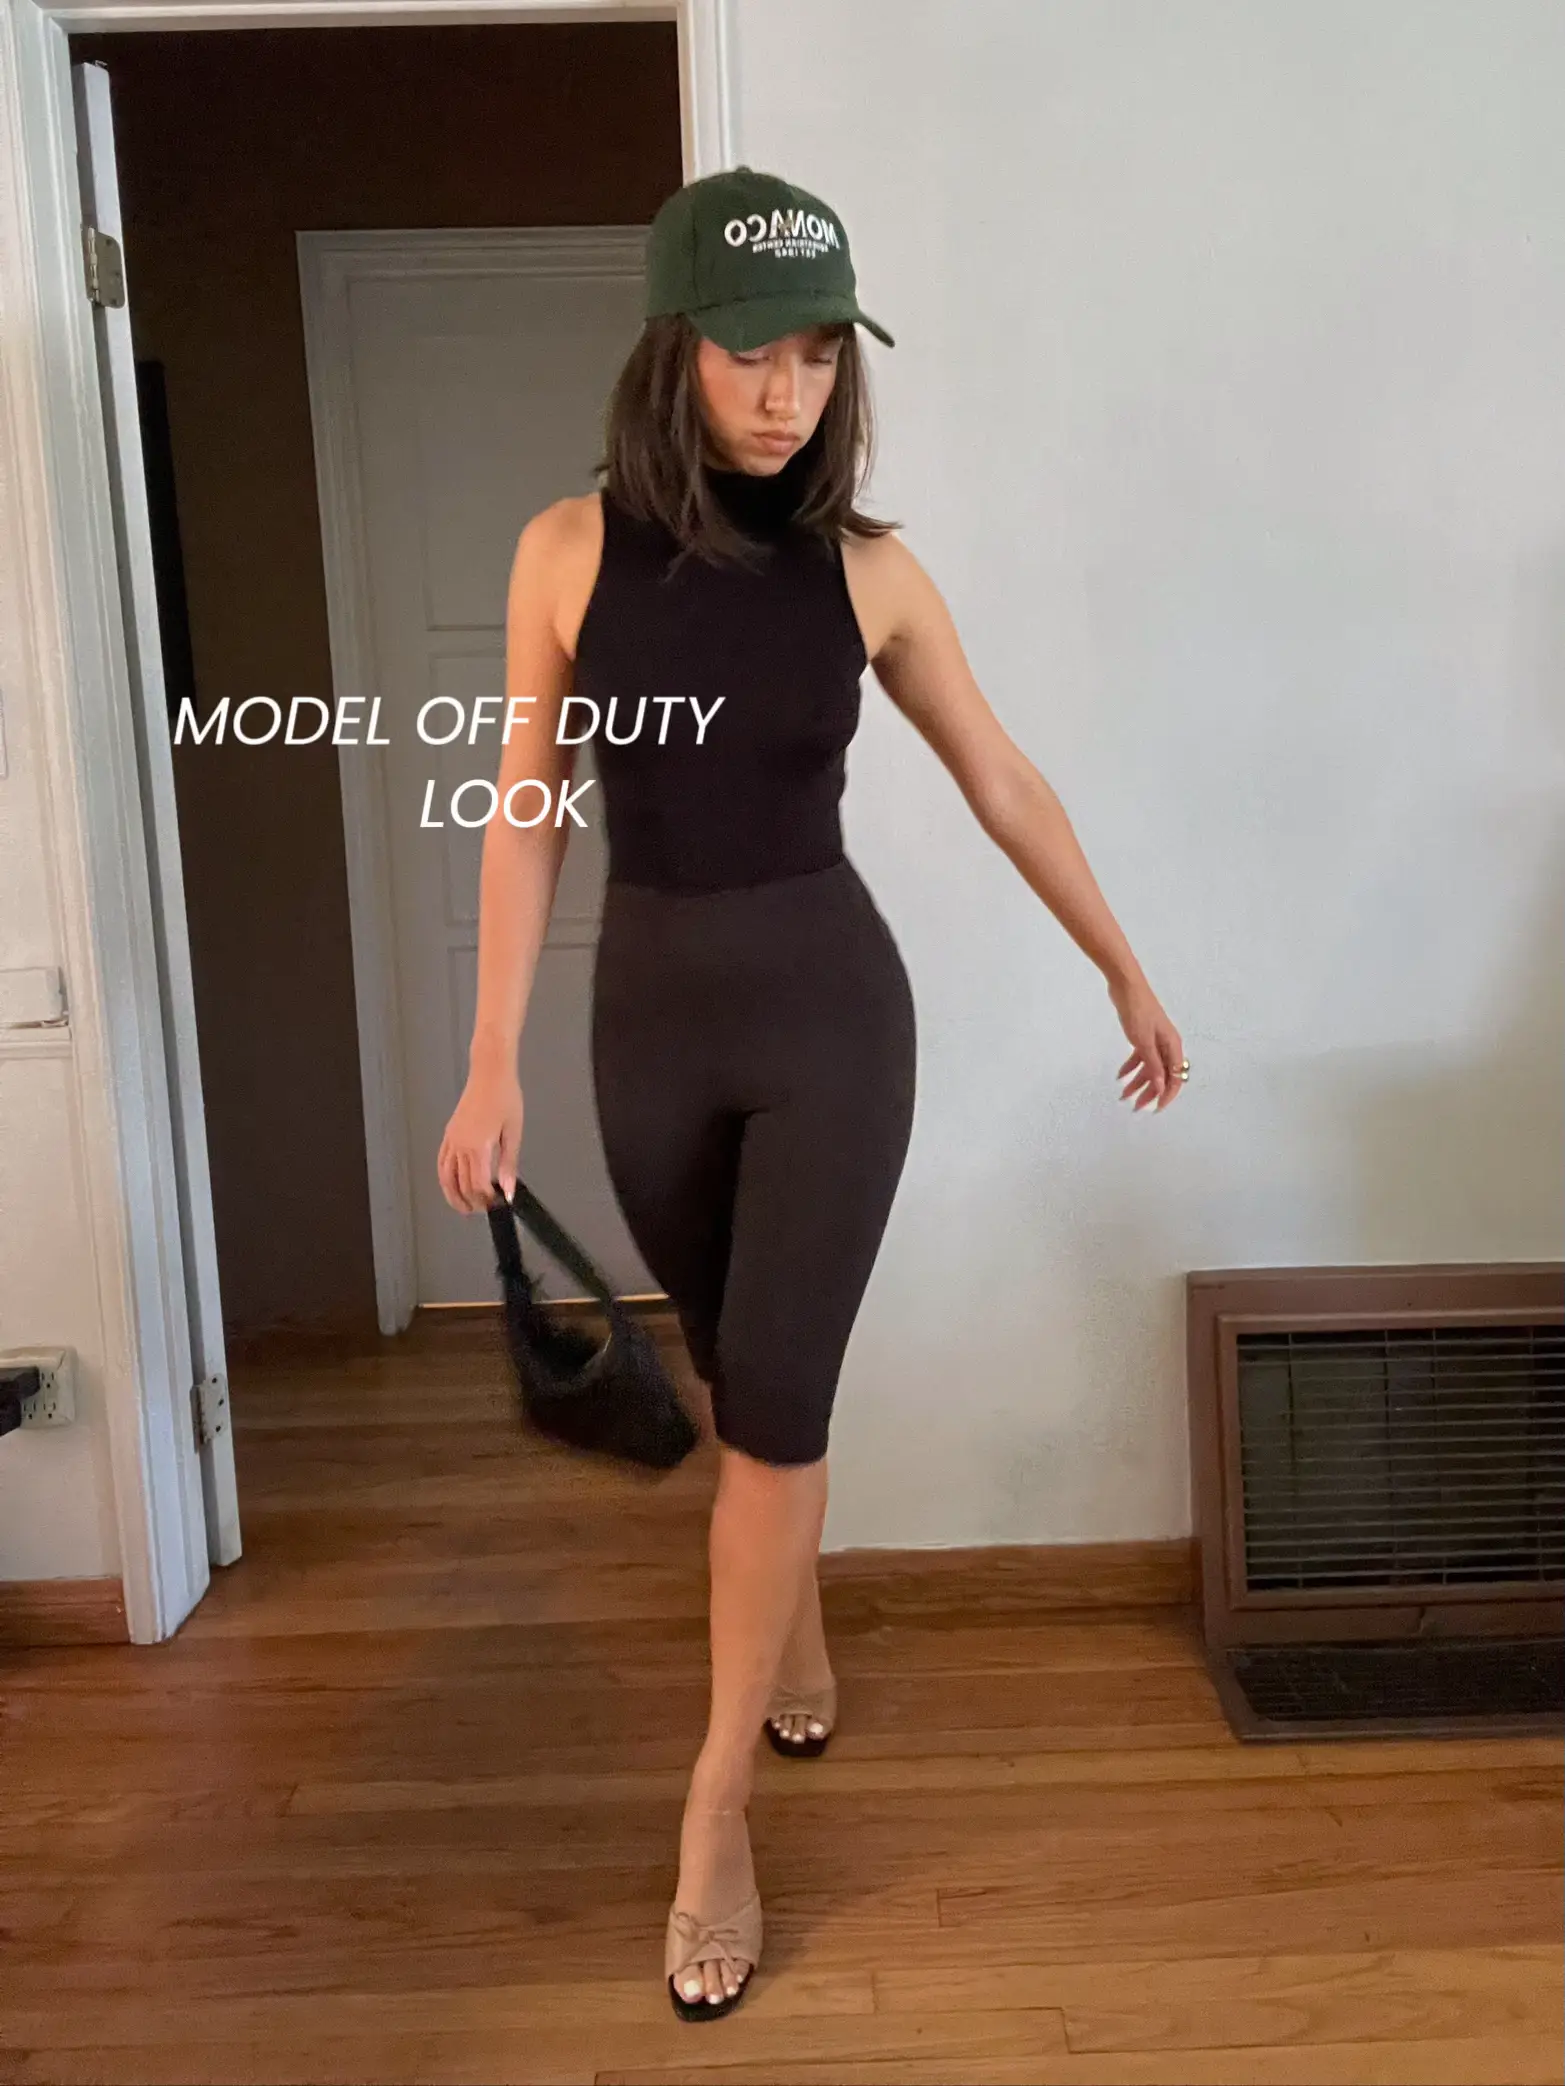 Kendall Jenner's 8 Wardrobe Staples Make Up Her Off-Duty Model Style